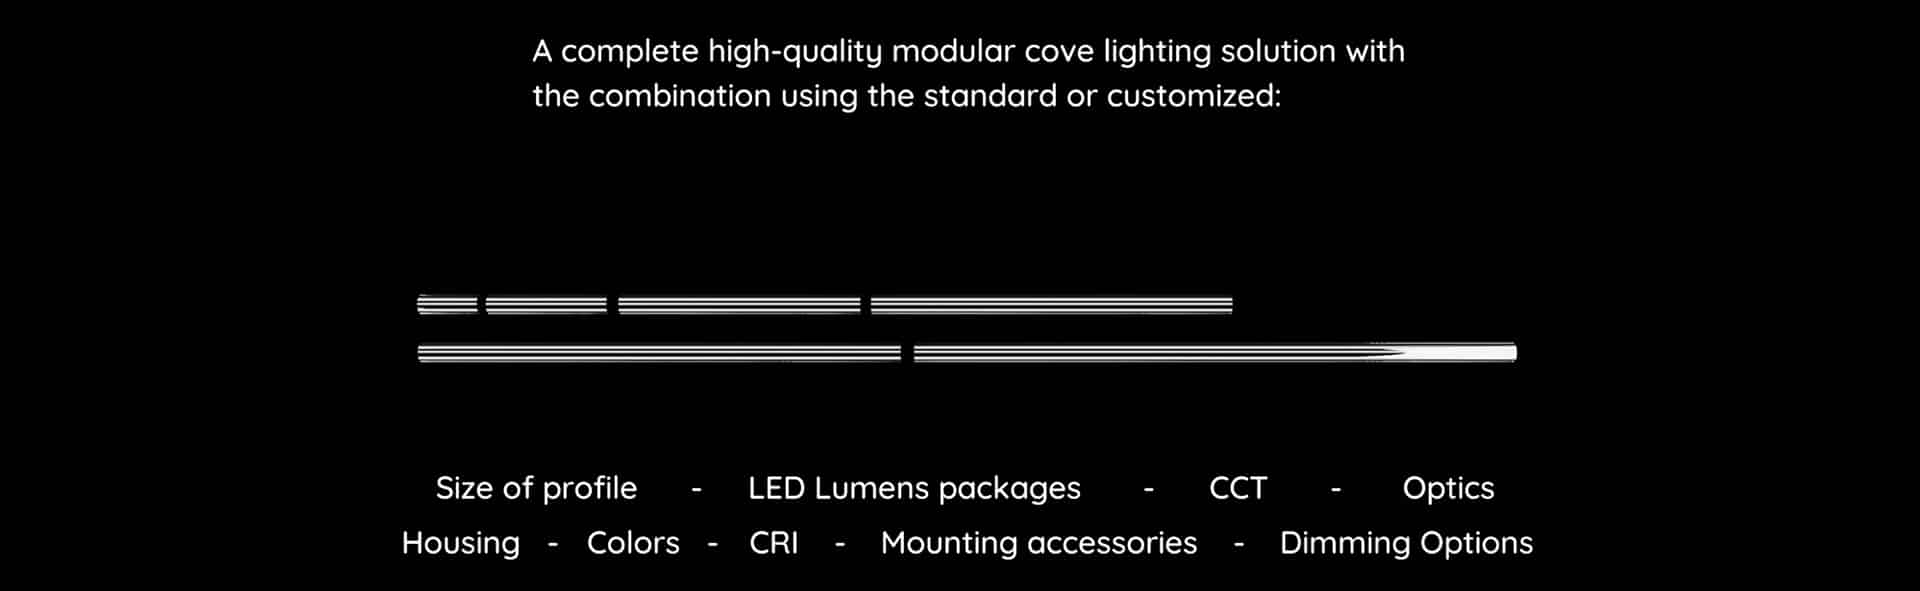 RHEA - SuperCove Lighting sizes